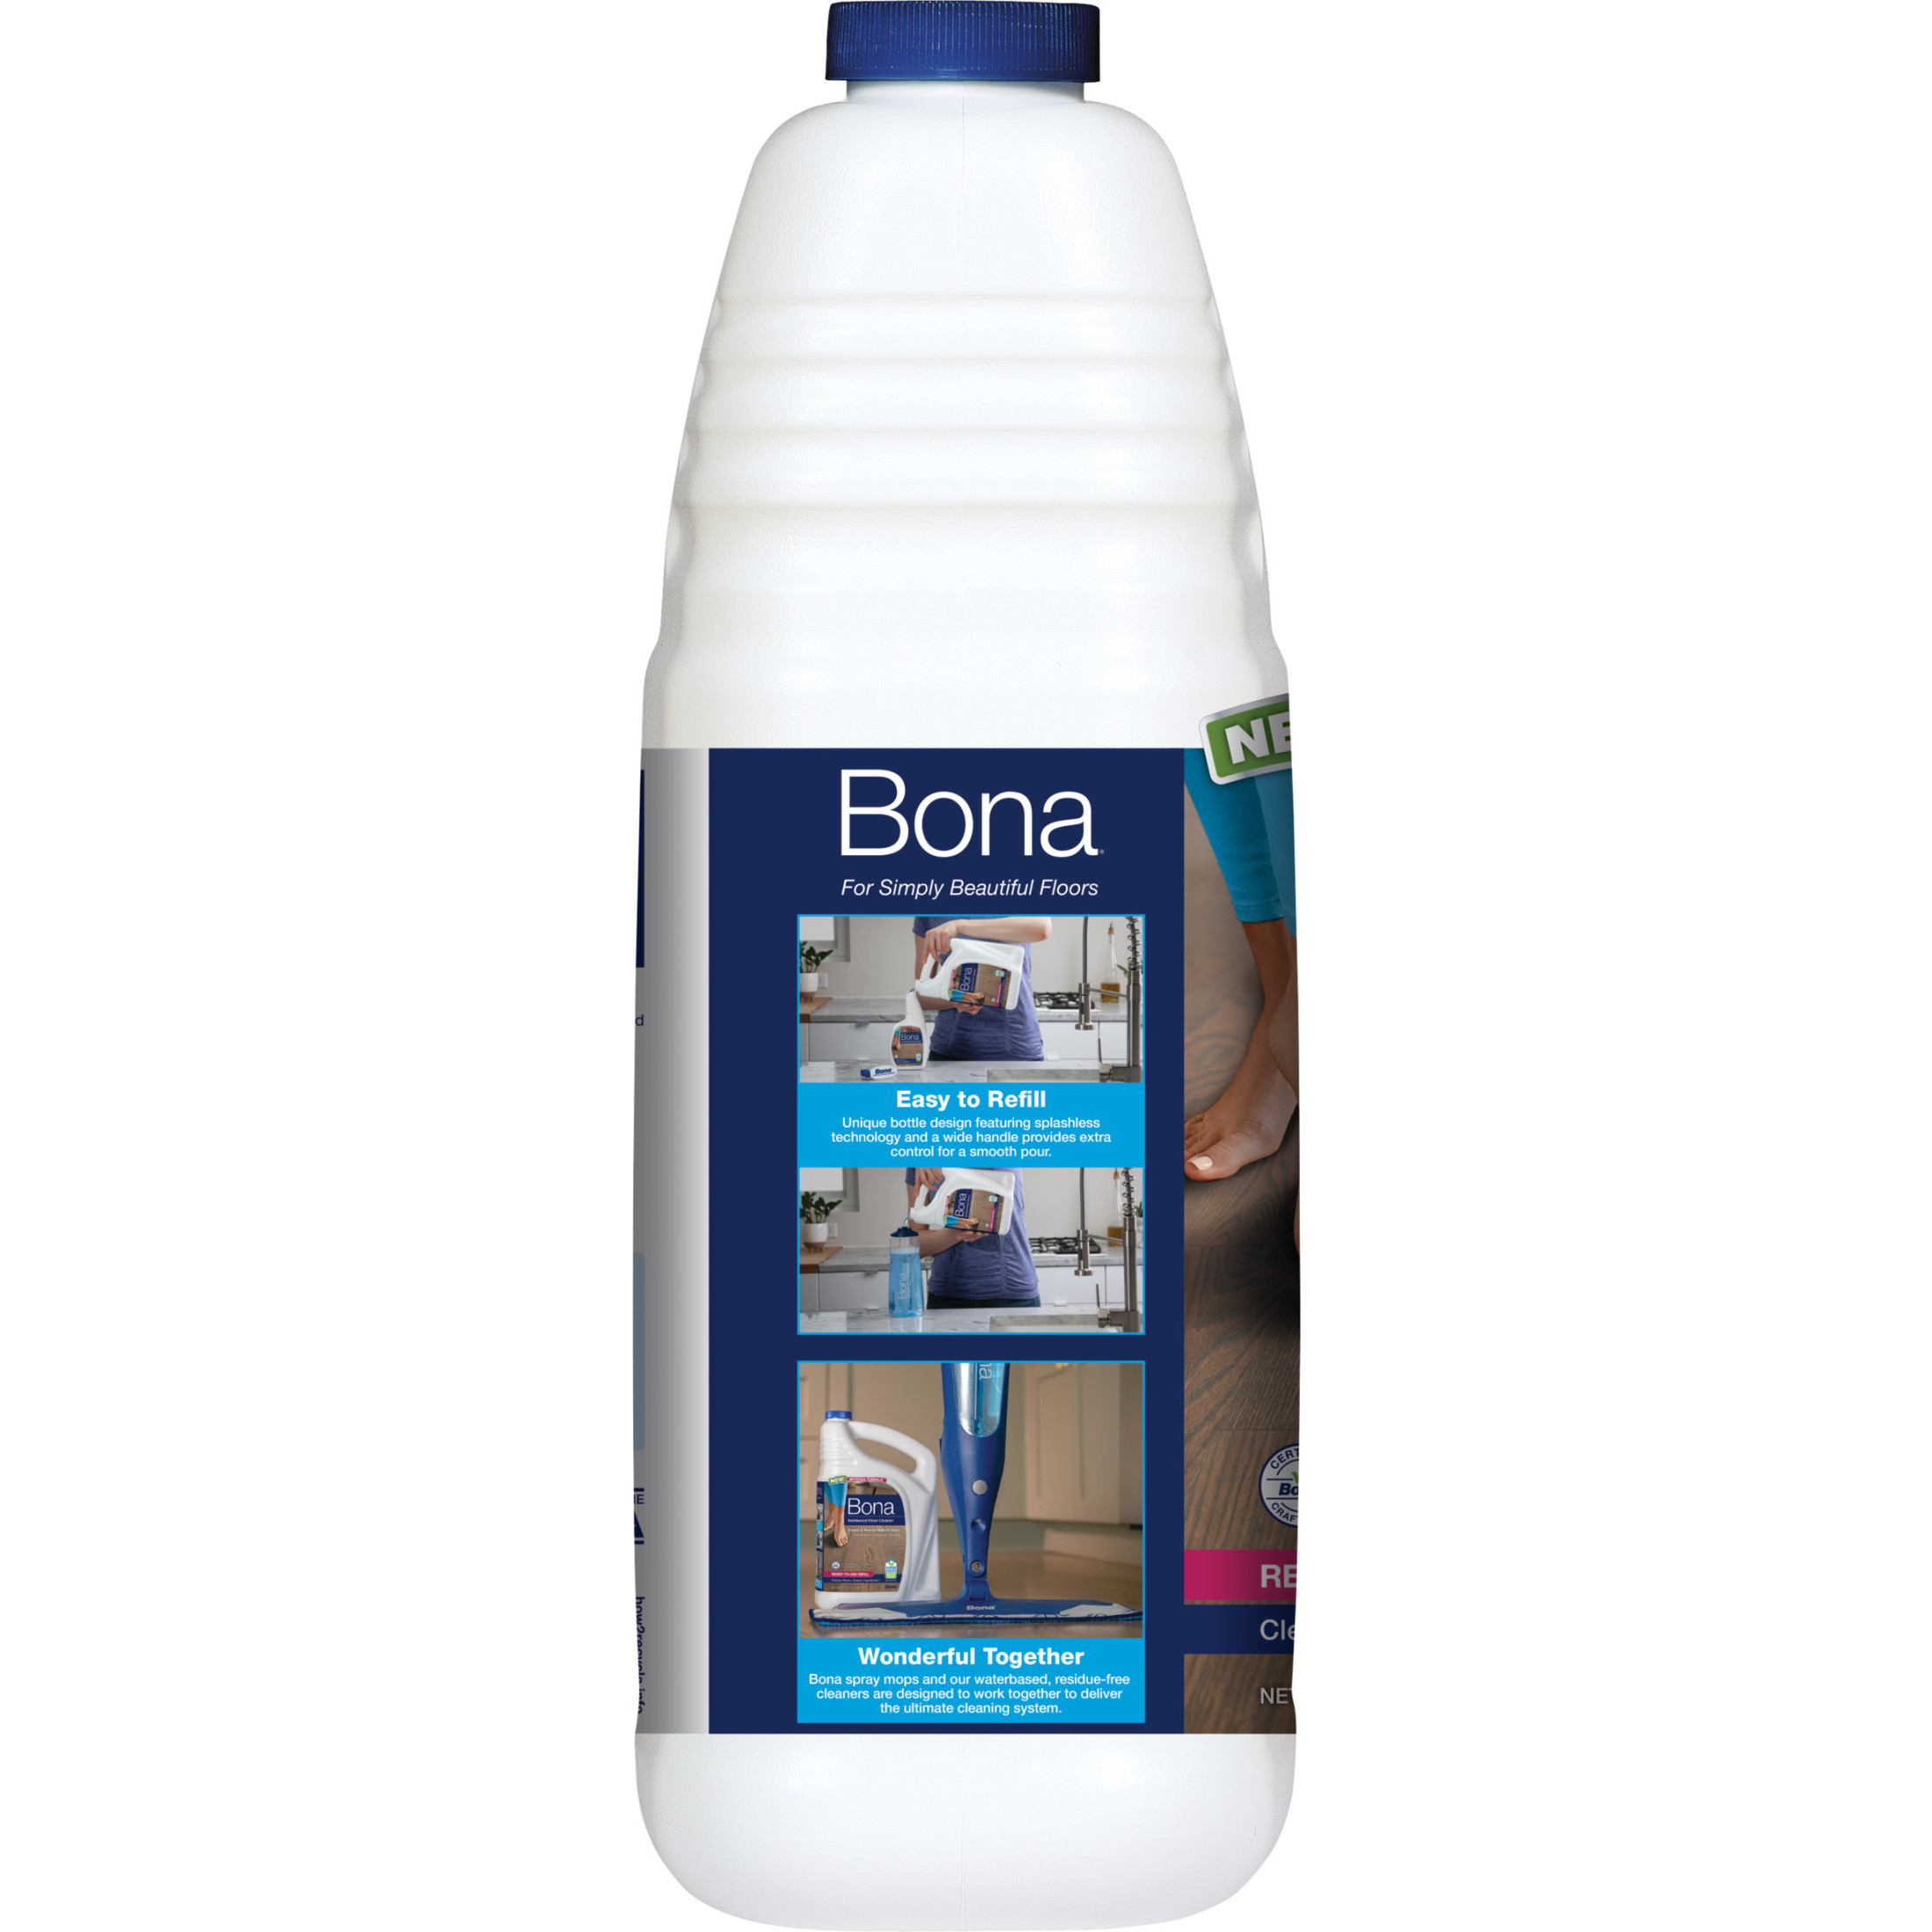 Bona Hardwood Floor Cleaner Refill, 96 fl oz - image 3 of 7